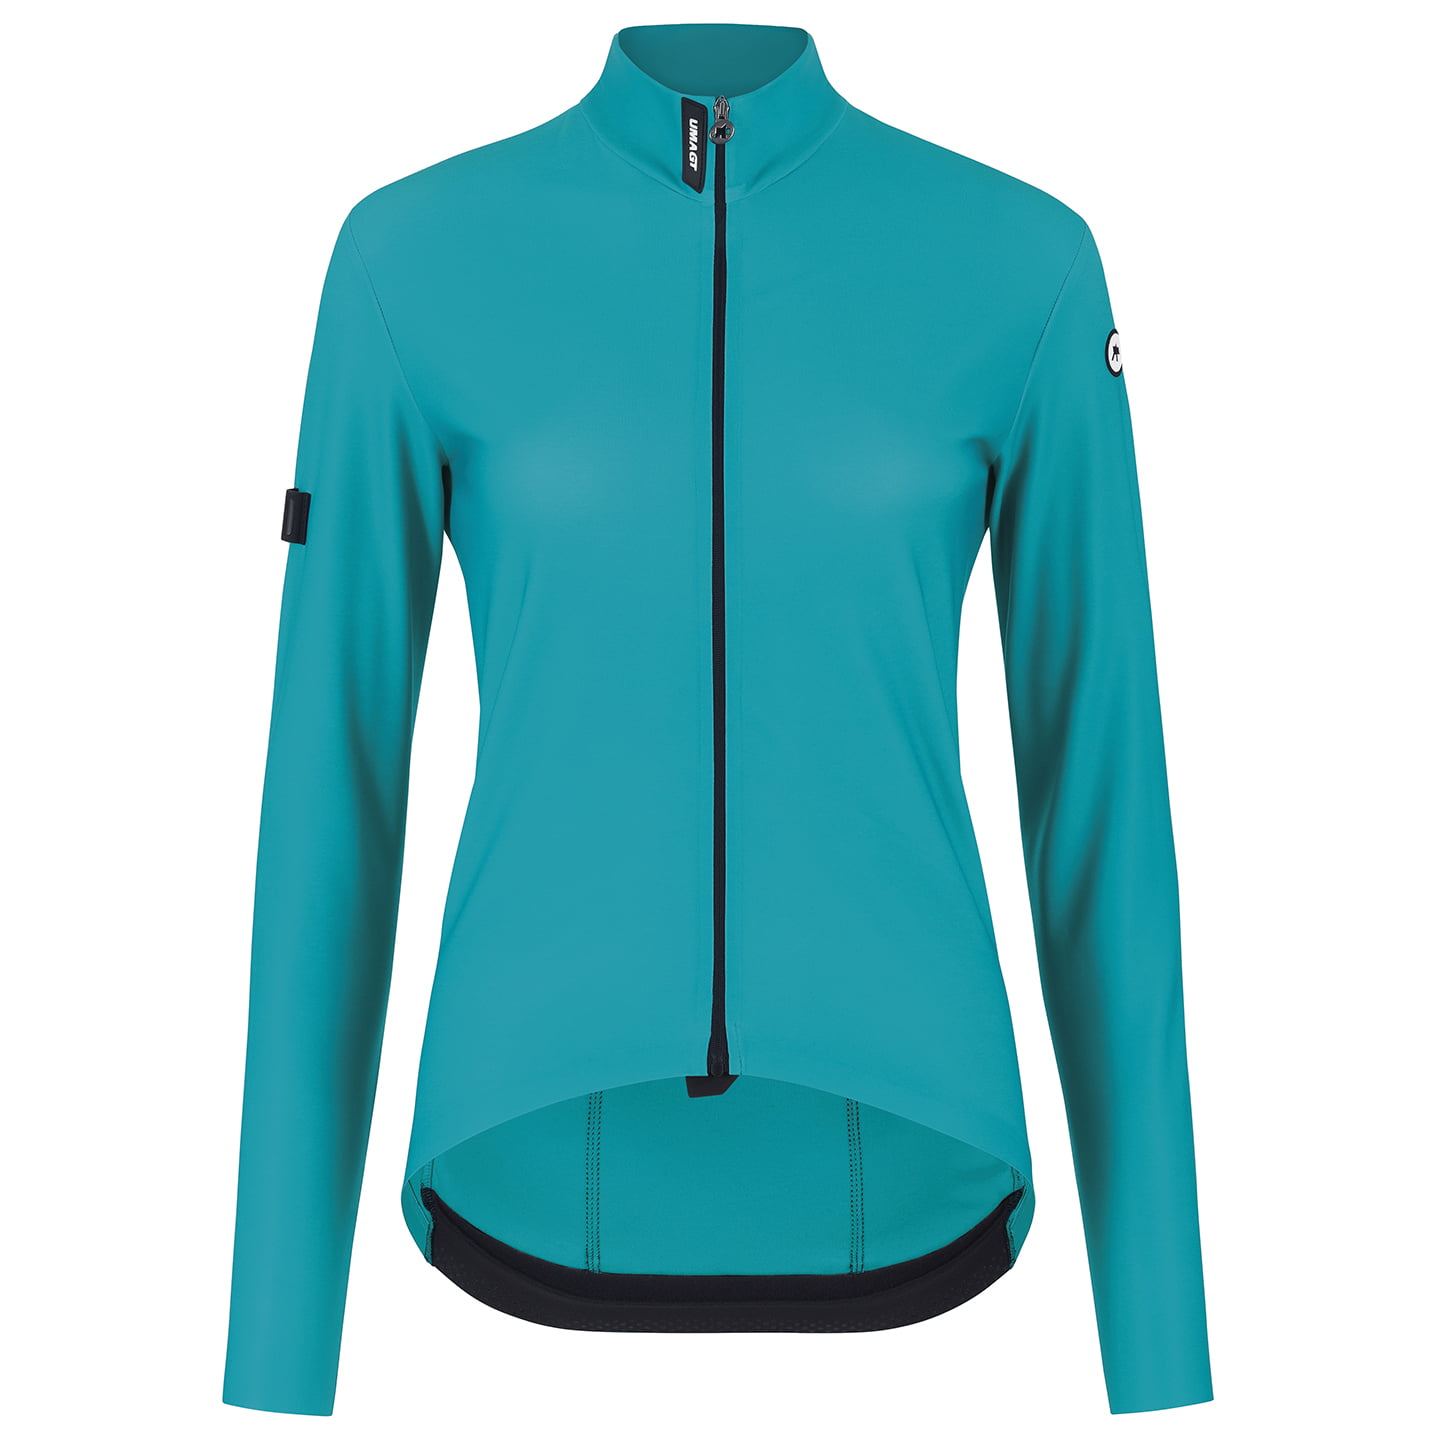 ASSOS Woman Mille GT Spring Fall C2 long sleeve jersey Women’s Long Sleeve Jersey, size XL, Cycle jersey, Bike gear